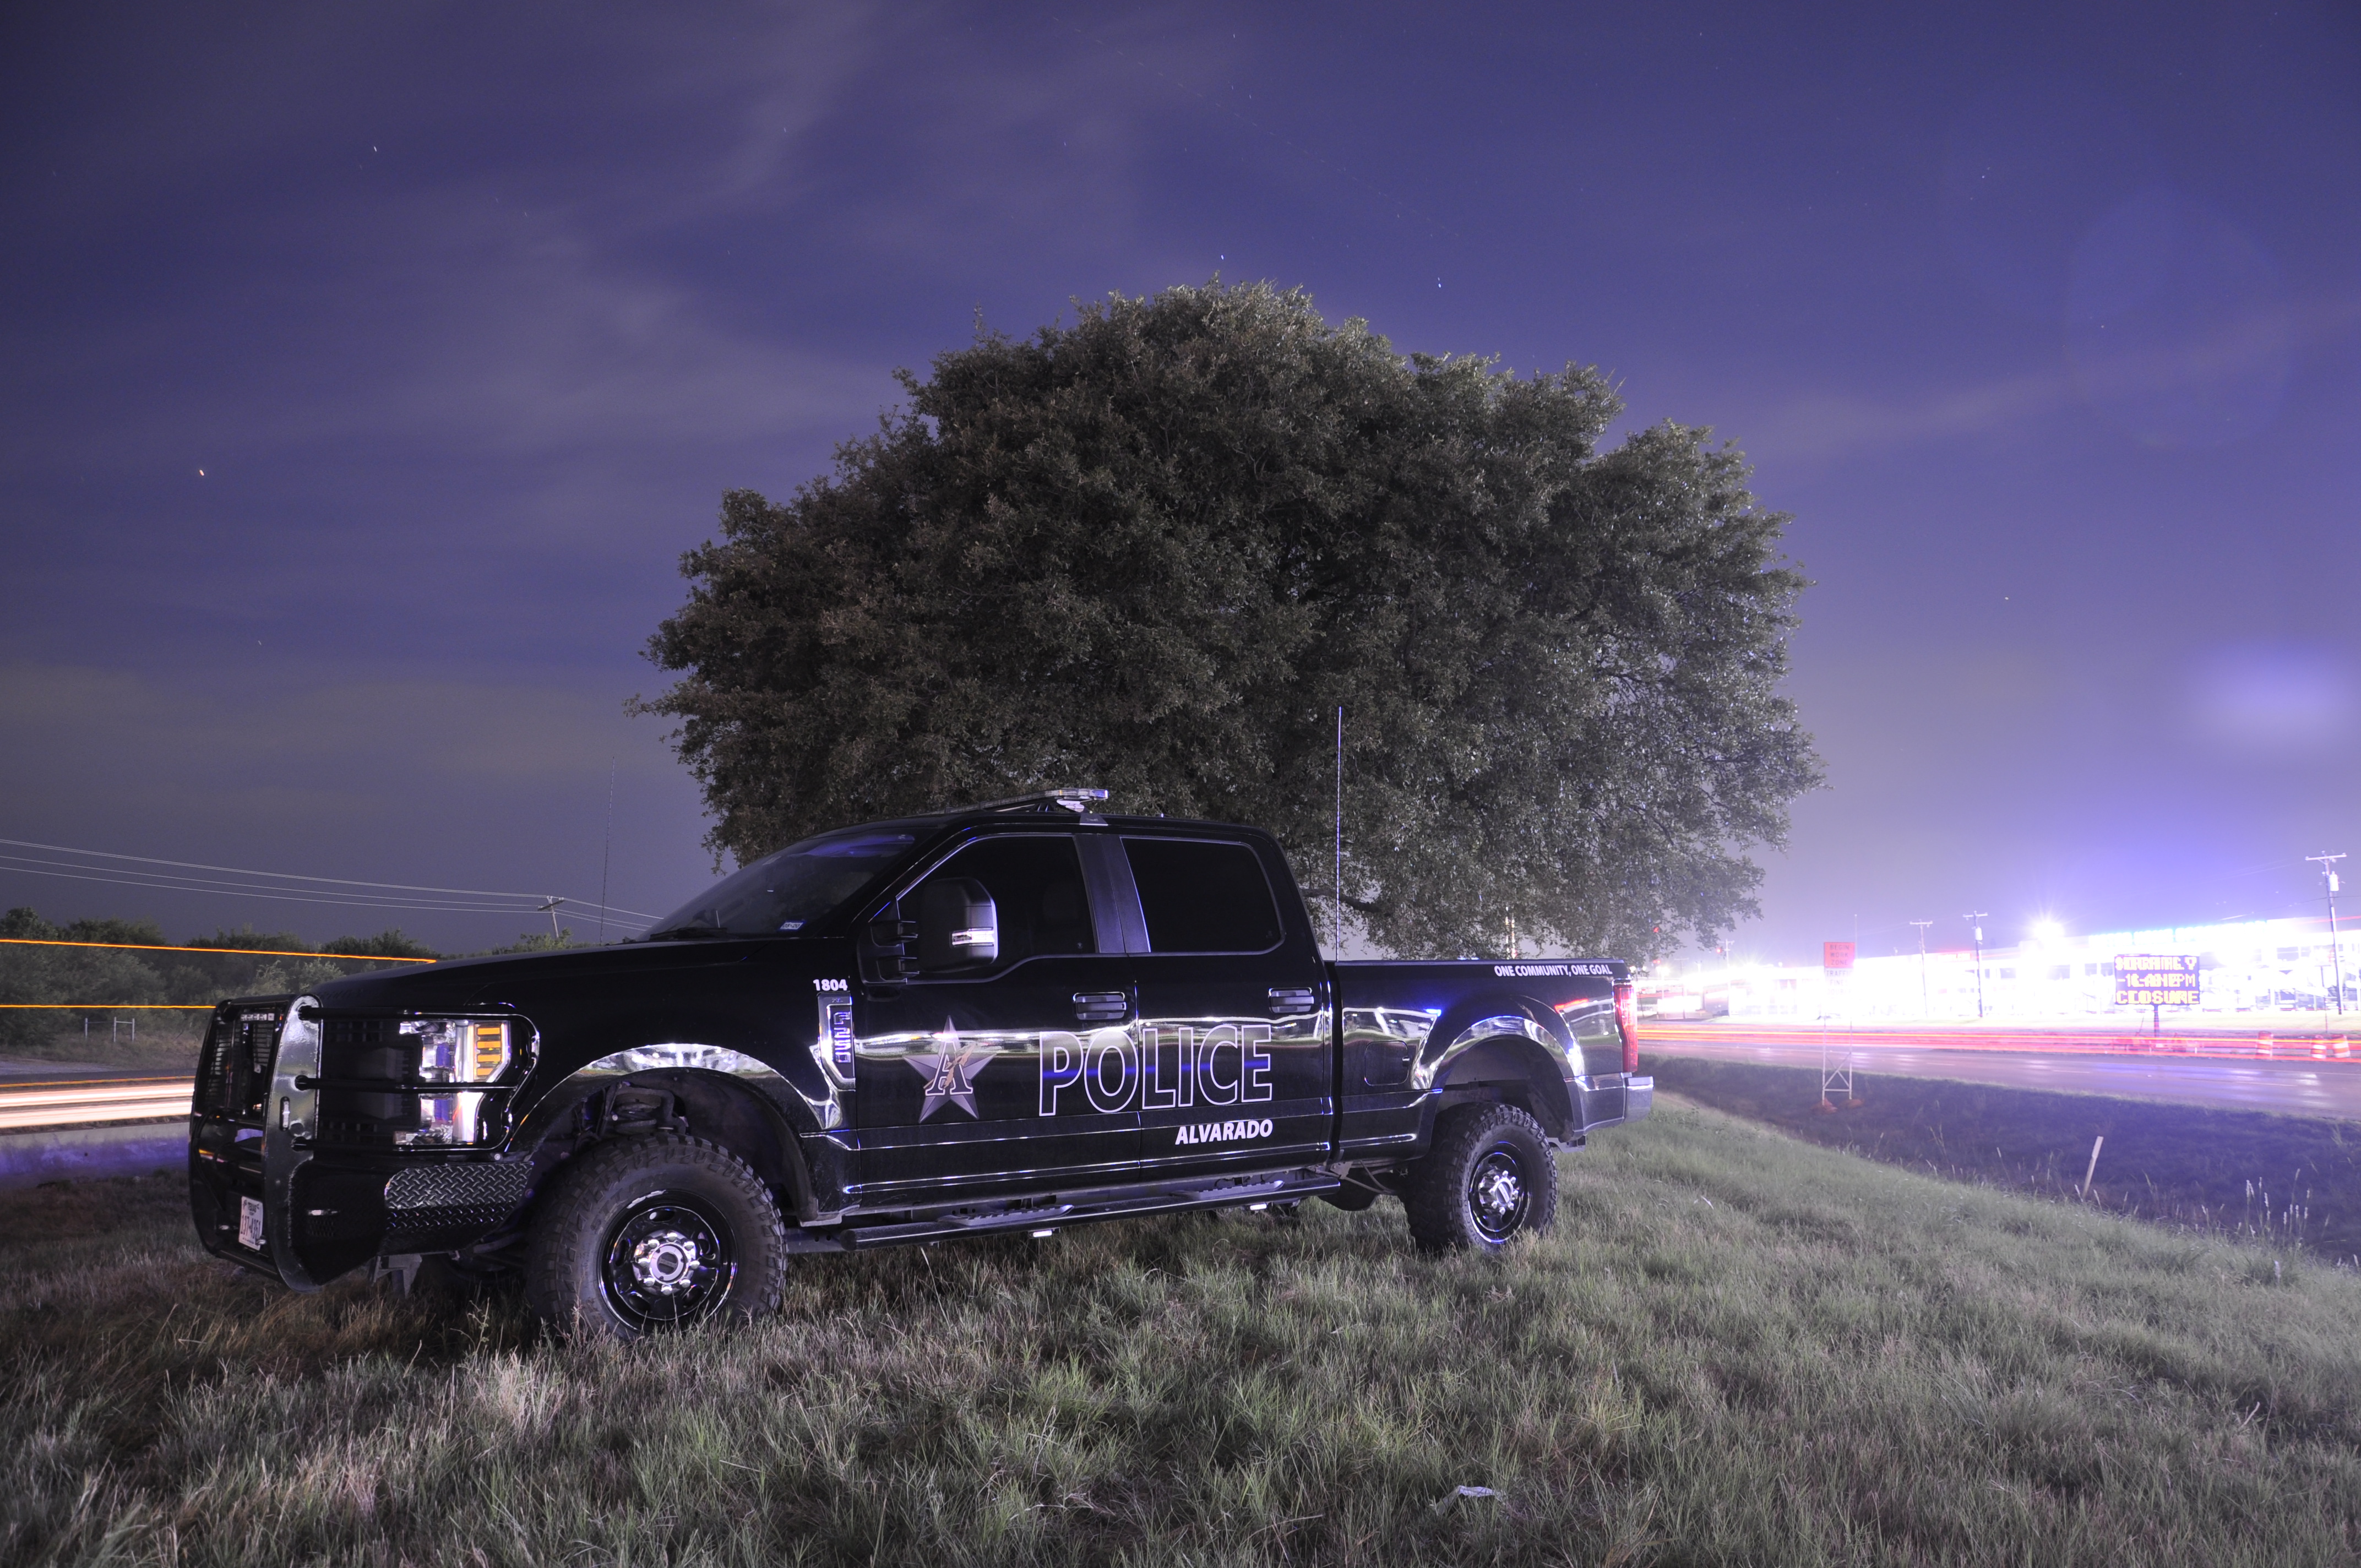 Alvarado Police Department , TX Public Safety Jobs